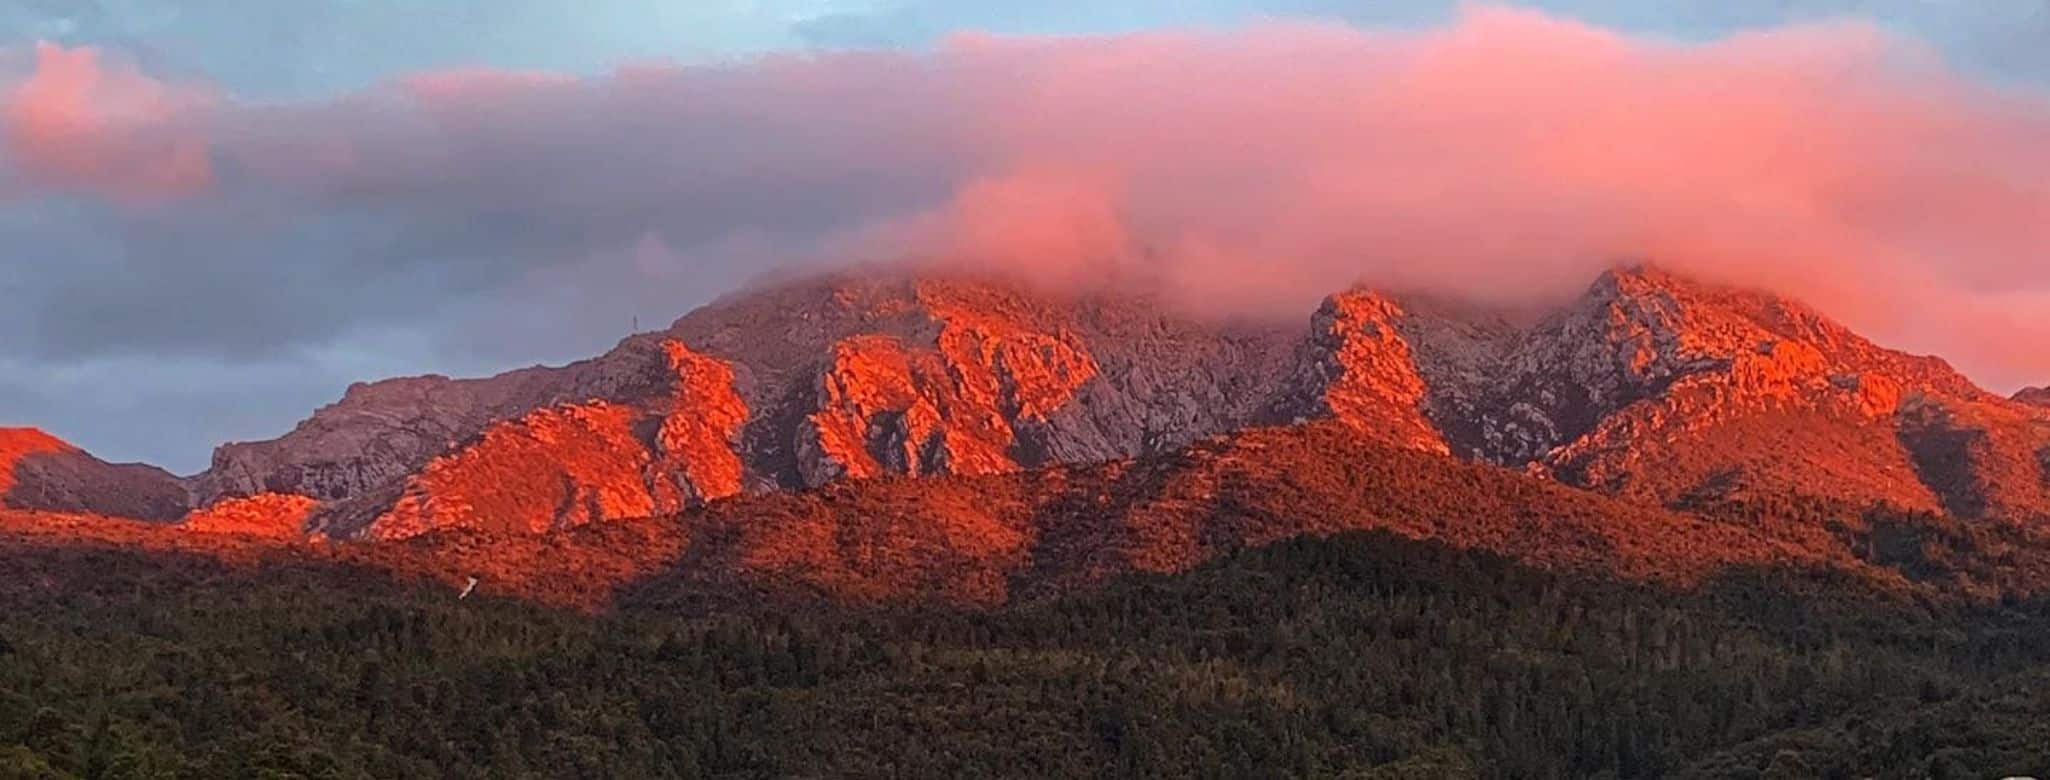 Penghana boasts uninterrupted views of Mount Owen, which sits over Queenstown in Tasmania's Western Wilderness